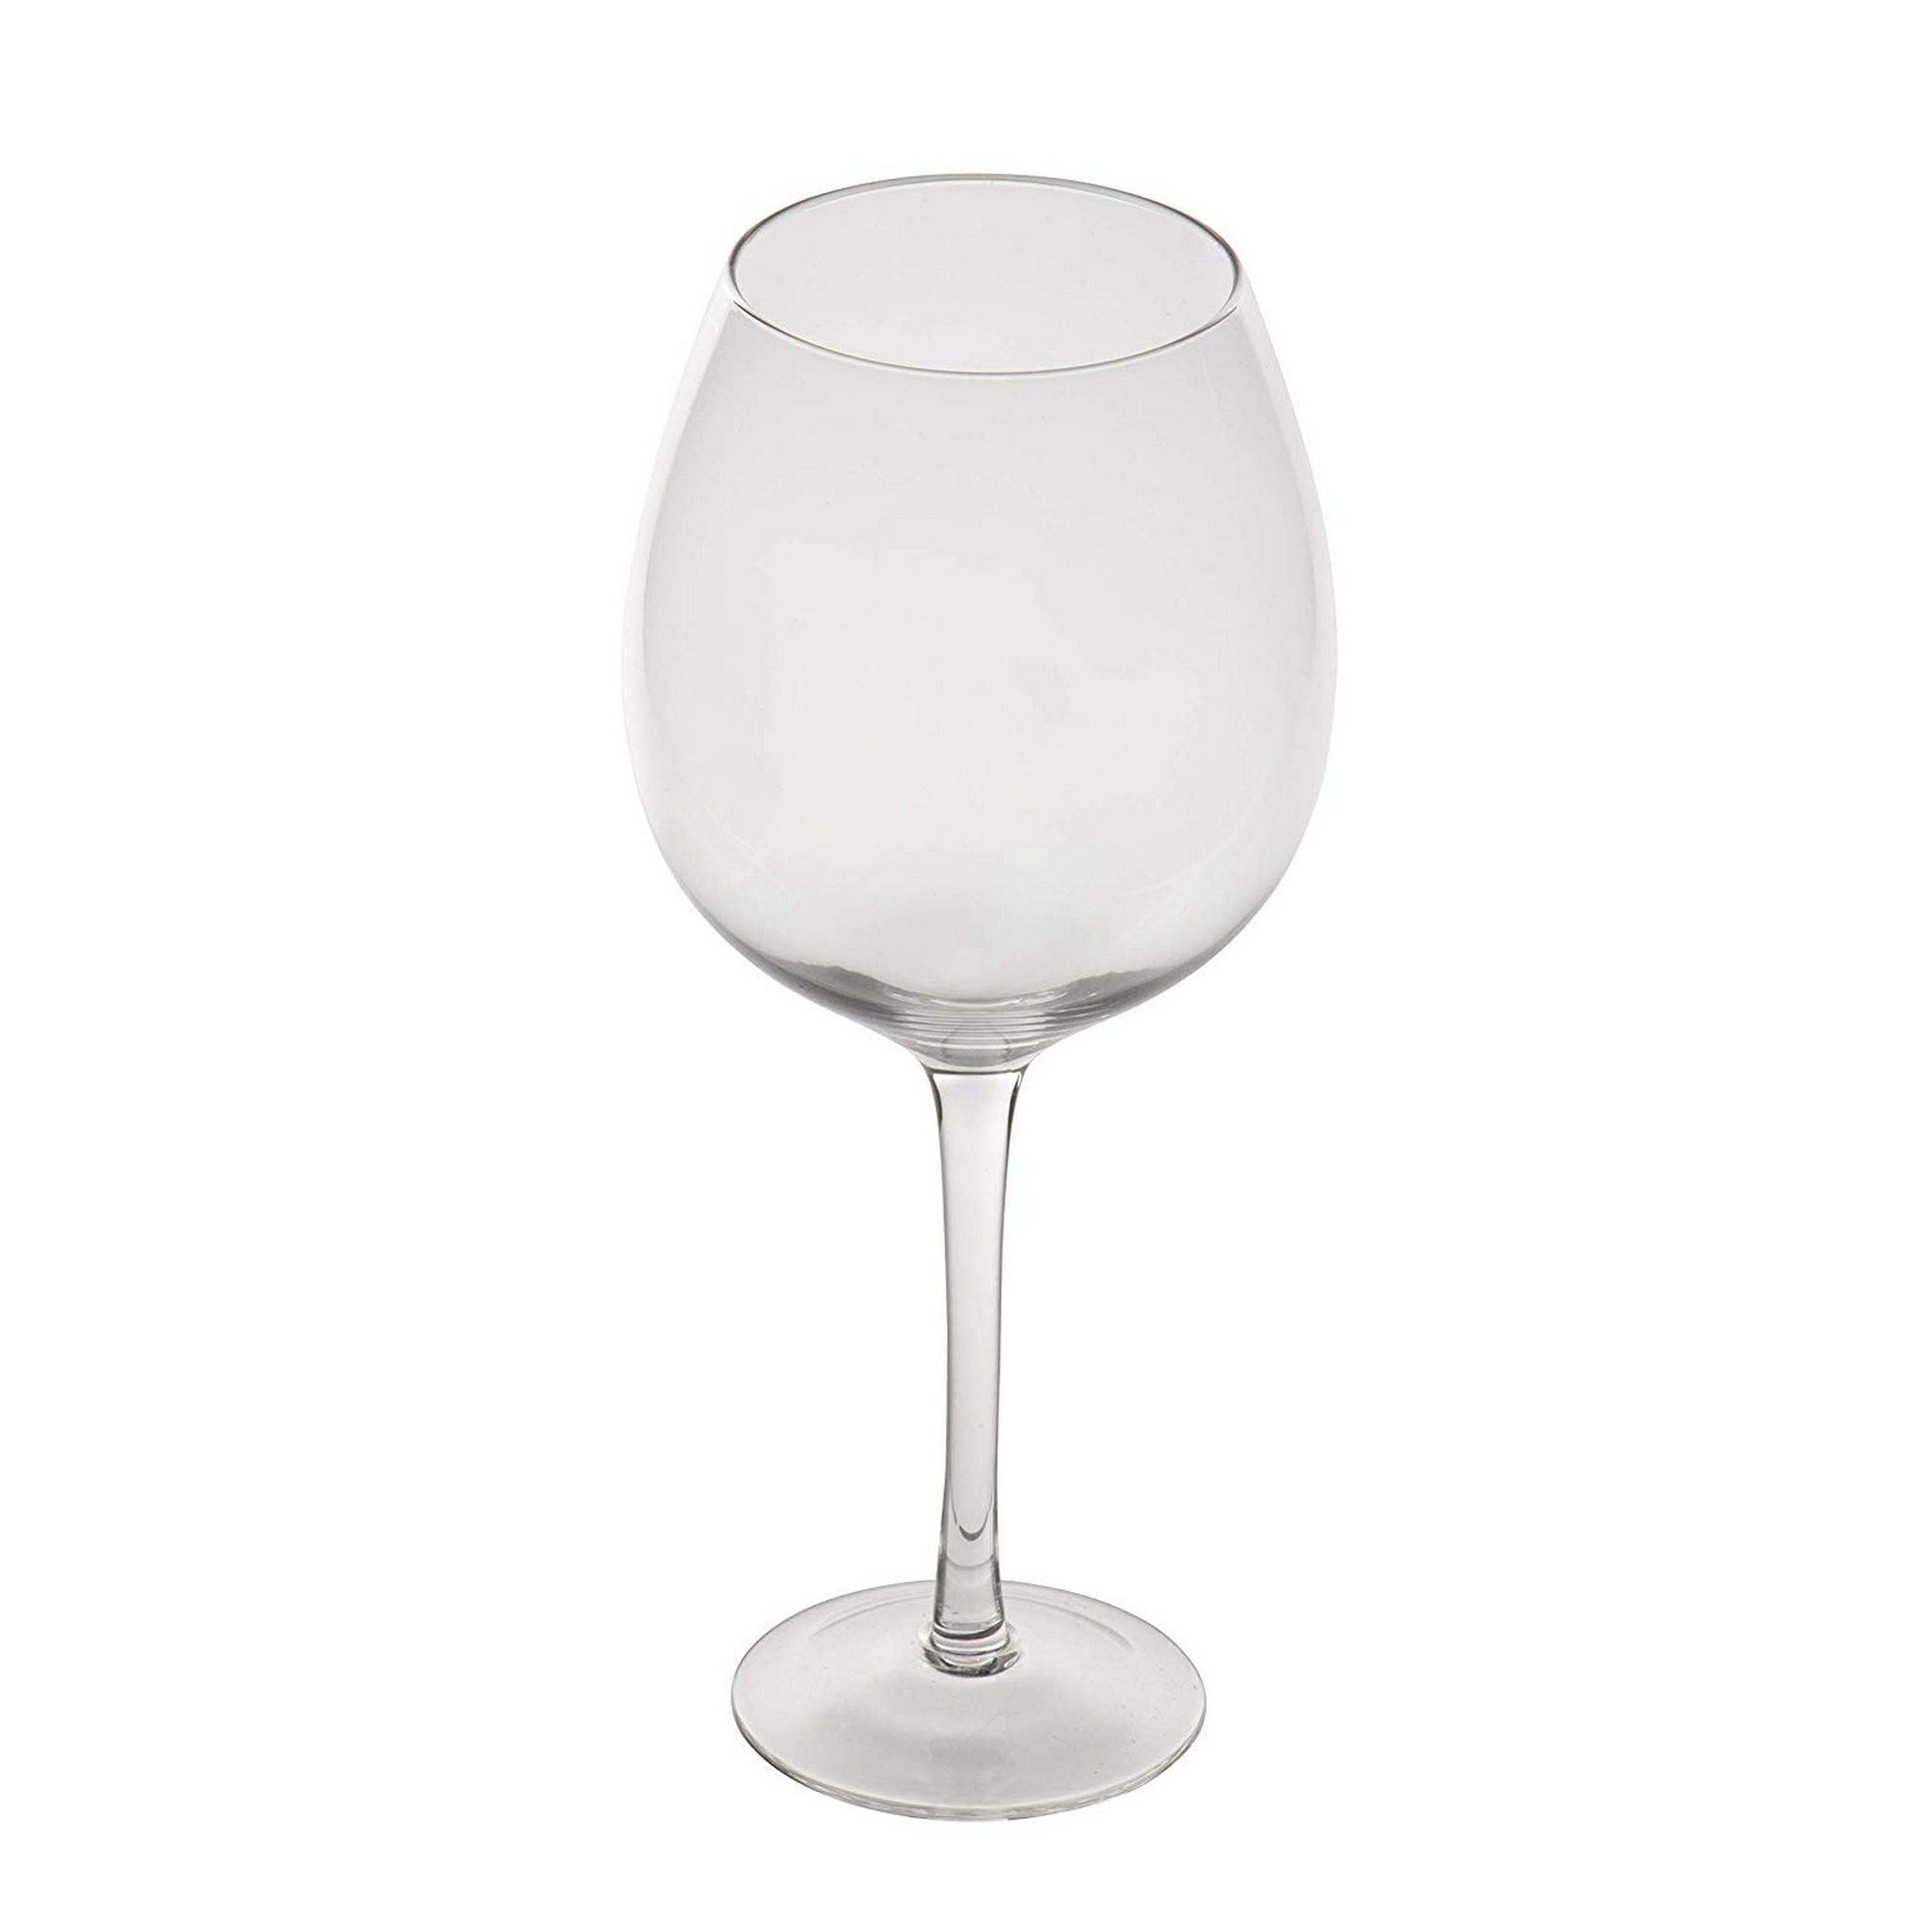 Ml wine glass